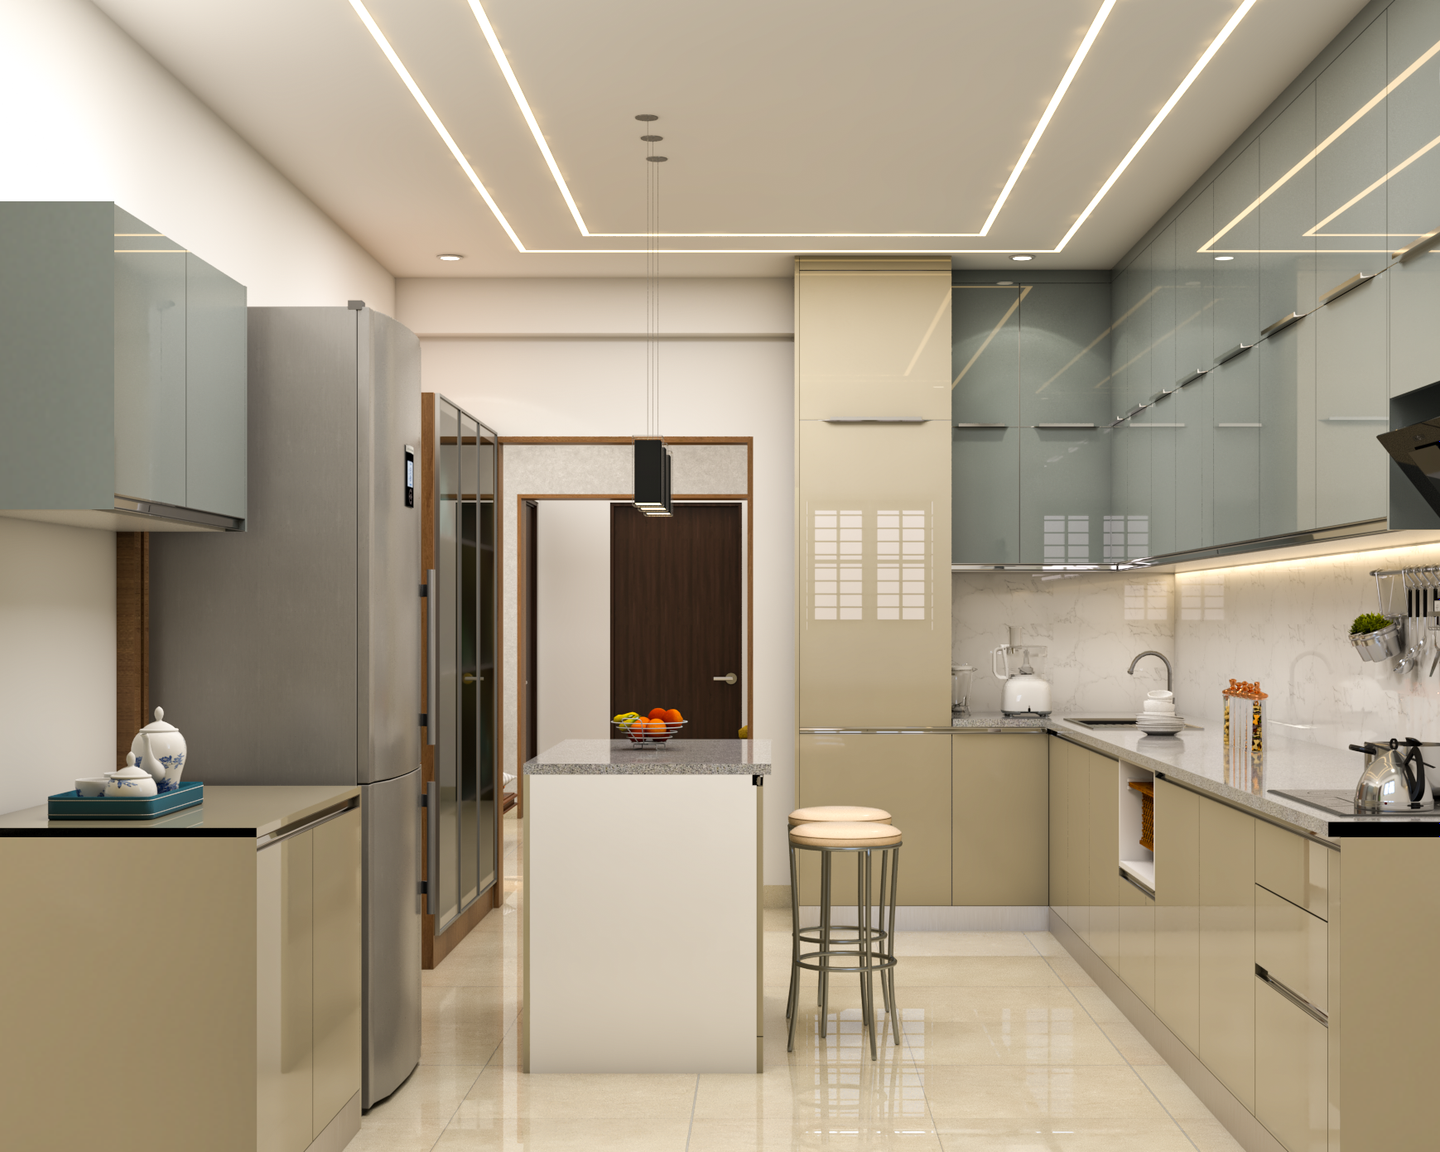 Modern Island Kitchen With Simple Design - Livspace